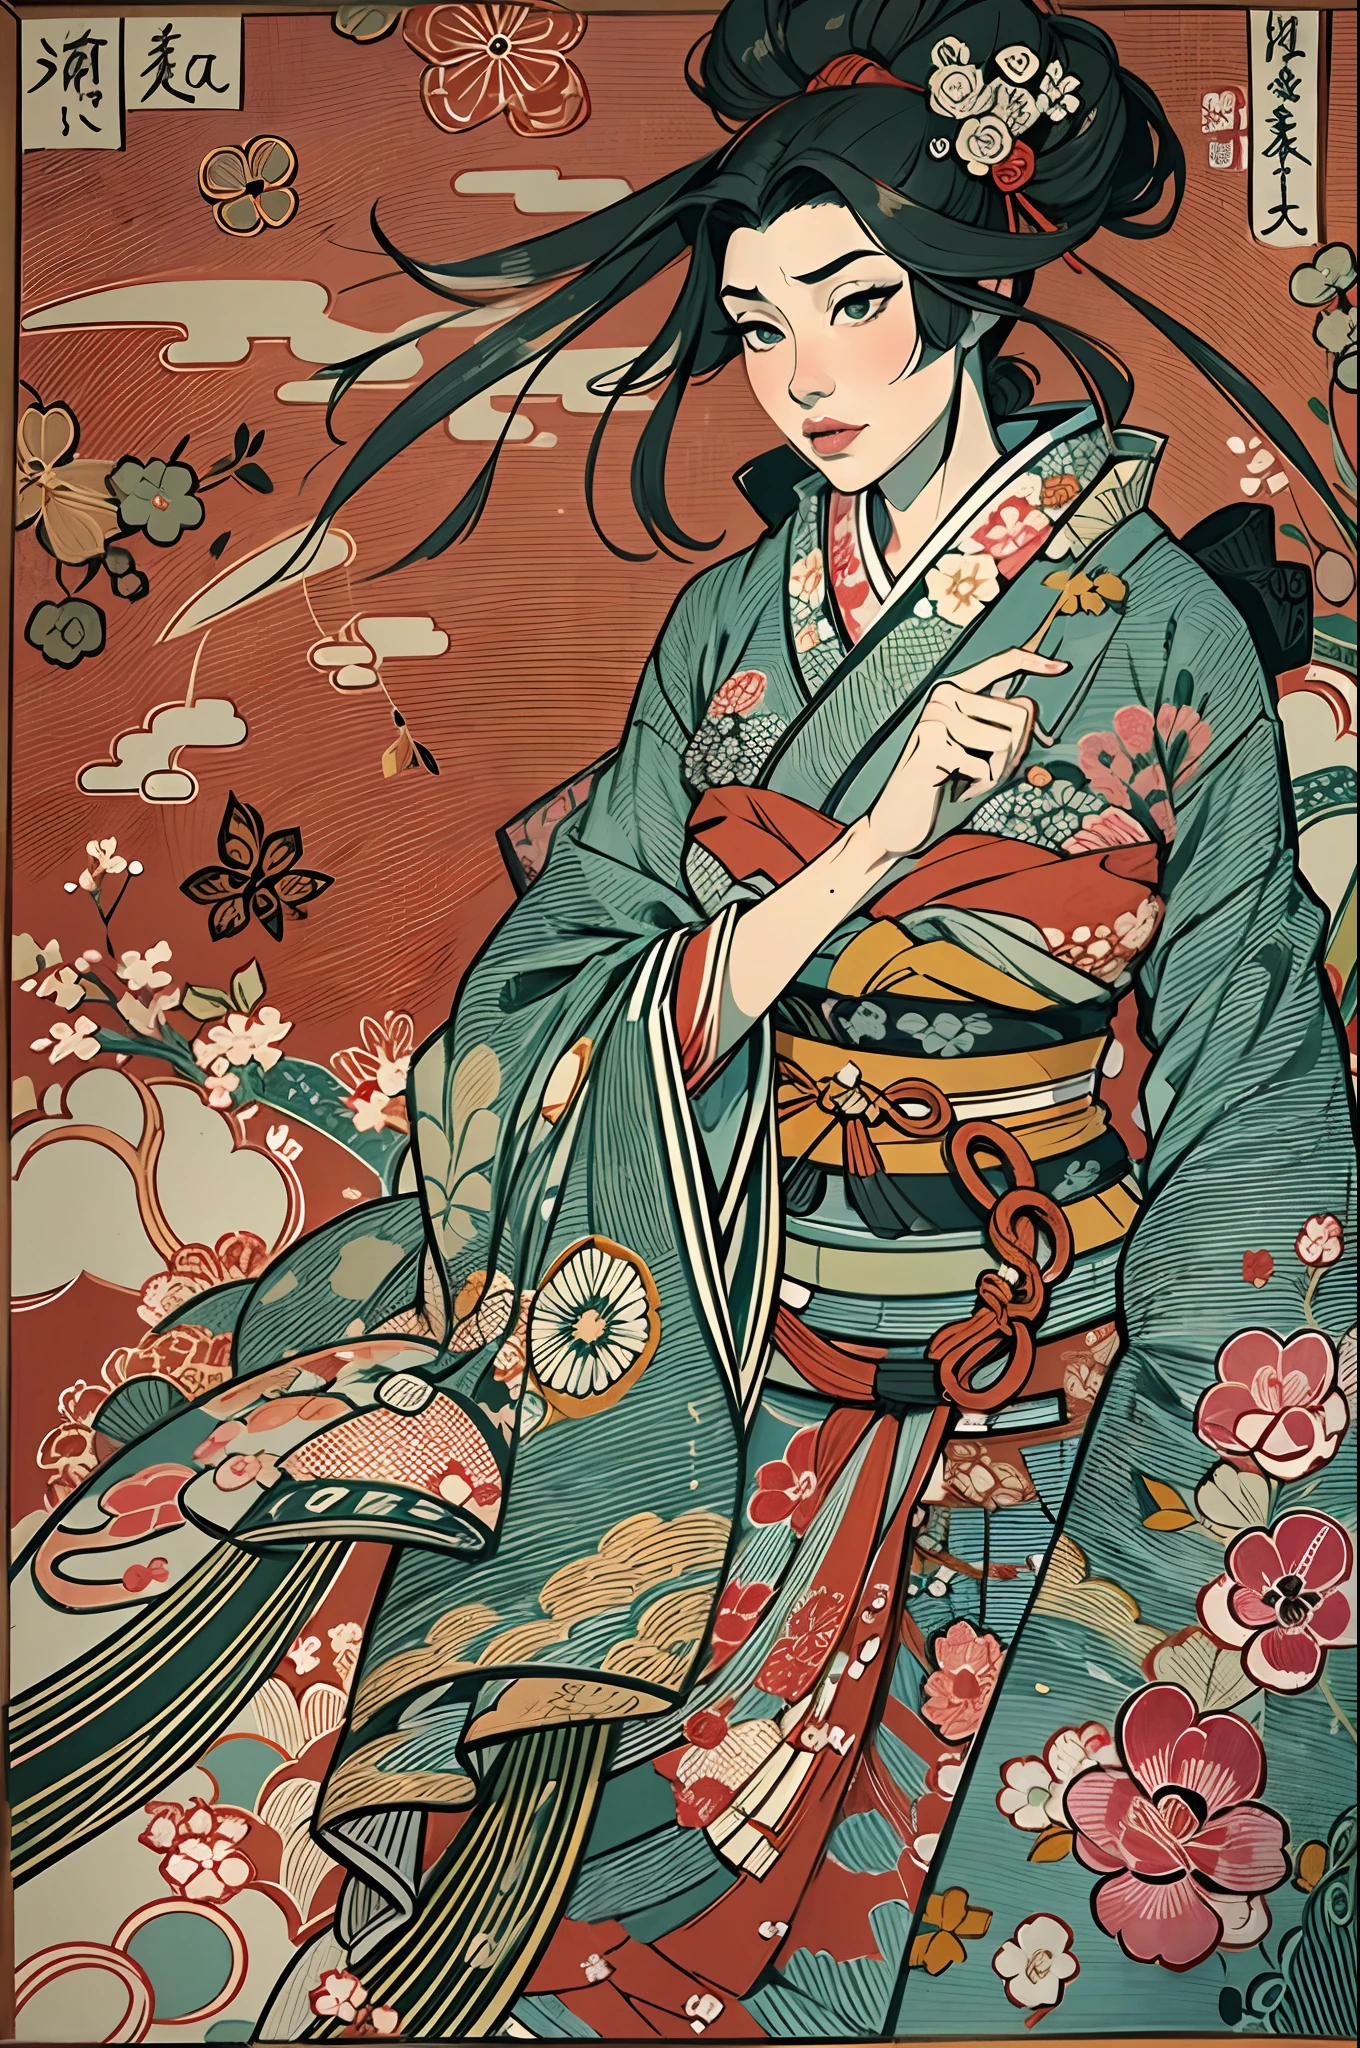 ((NSFW)),Sharaku,여자의 초상화,이미지 중앙에 위치합니다, 사진 전체에 일본식 효과와 장식이 흩어져 있습니다.